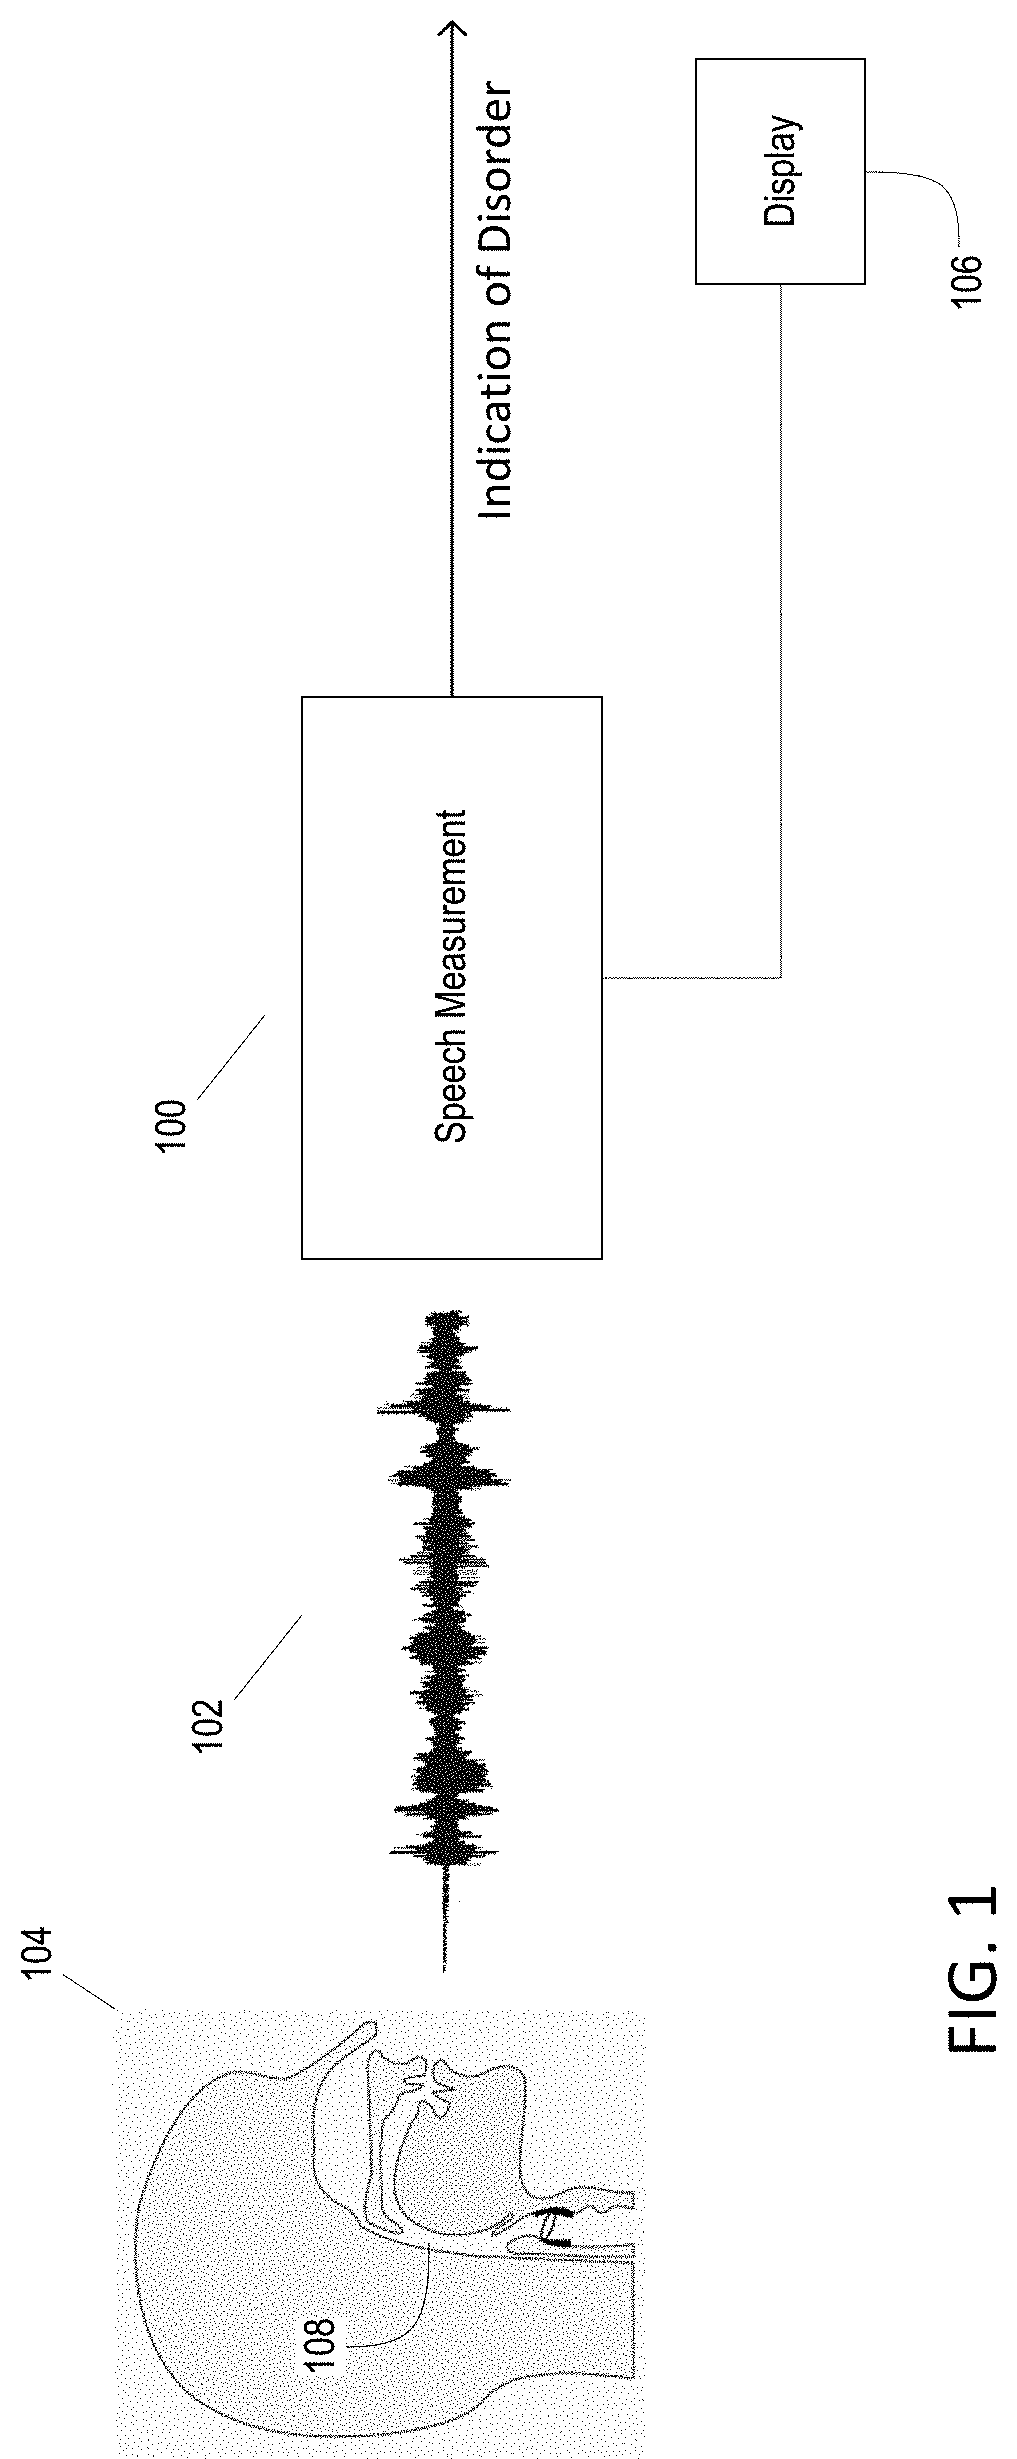 Measurement of neuromotor coordination from speech